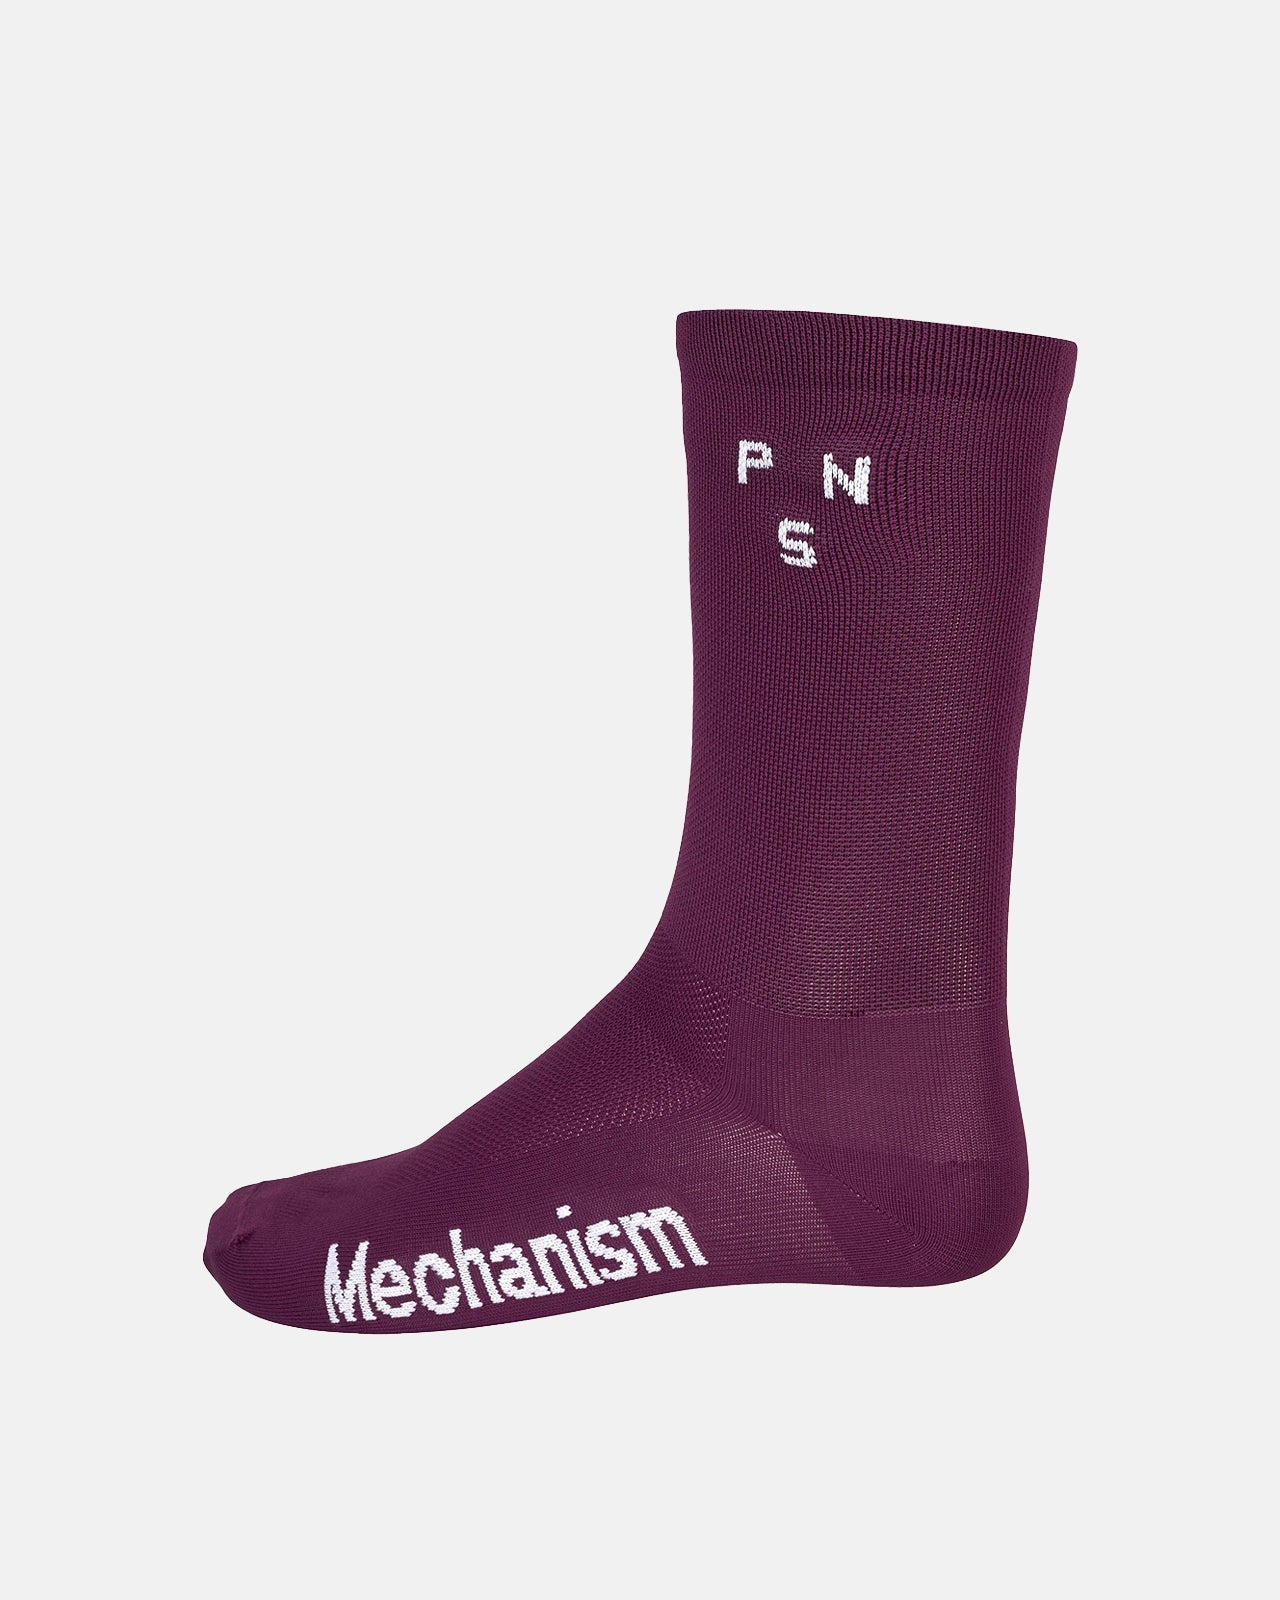 Mechanism Socks - Dark Purple